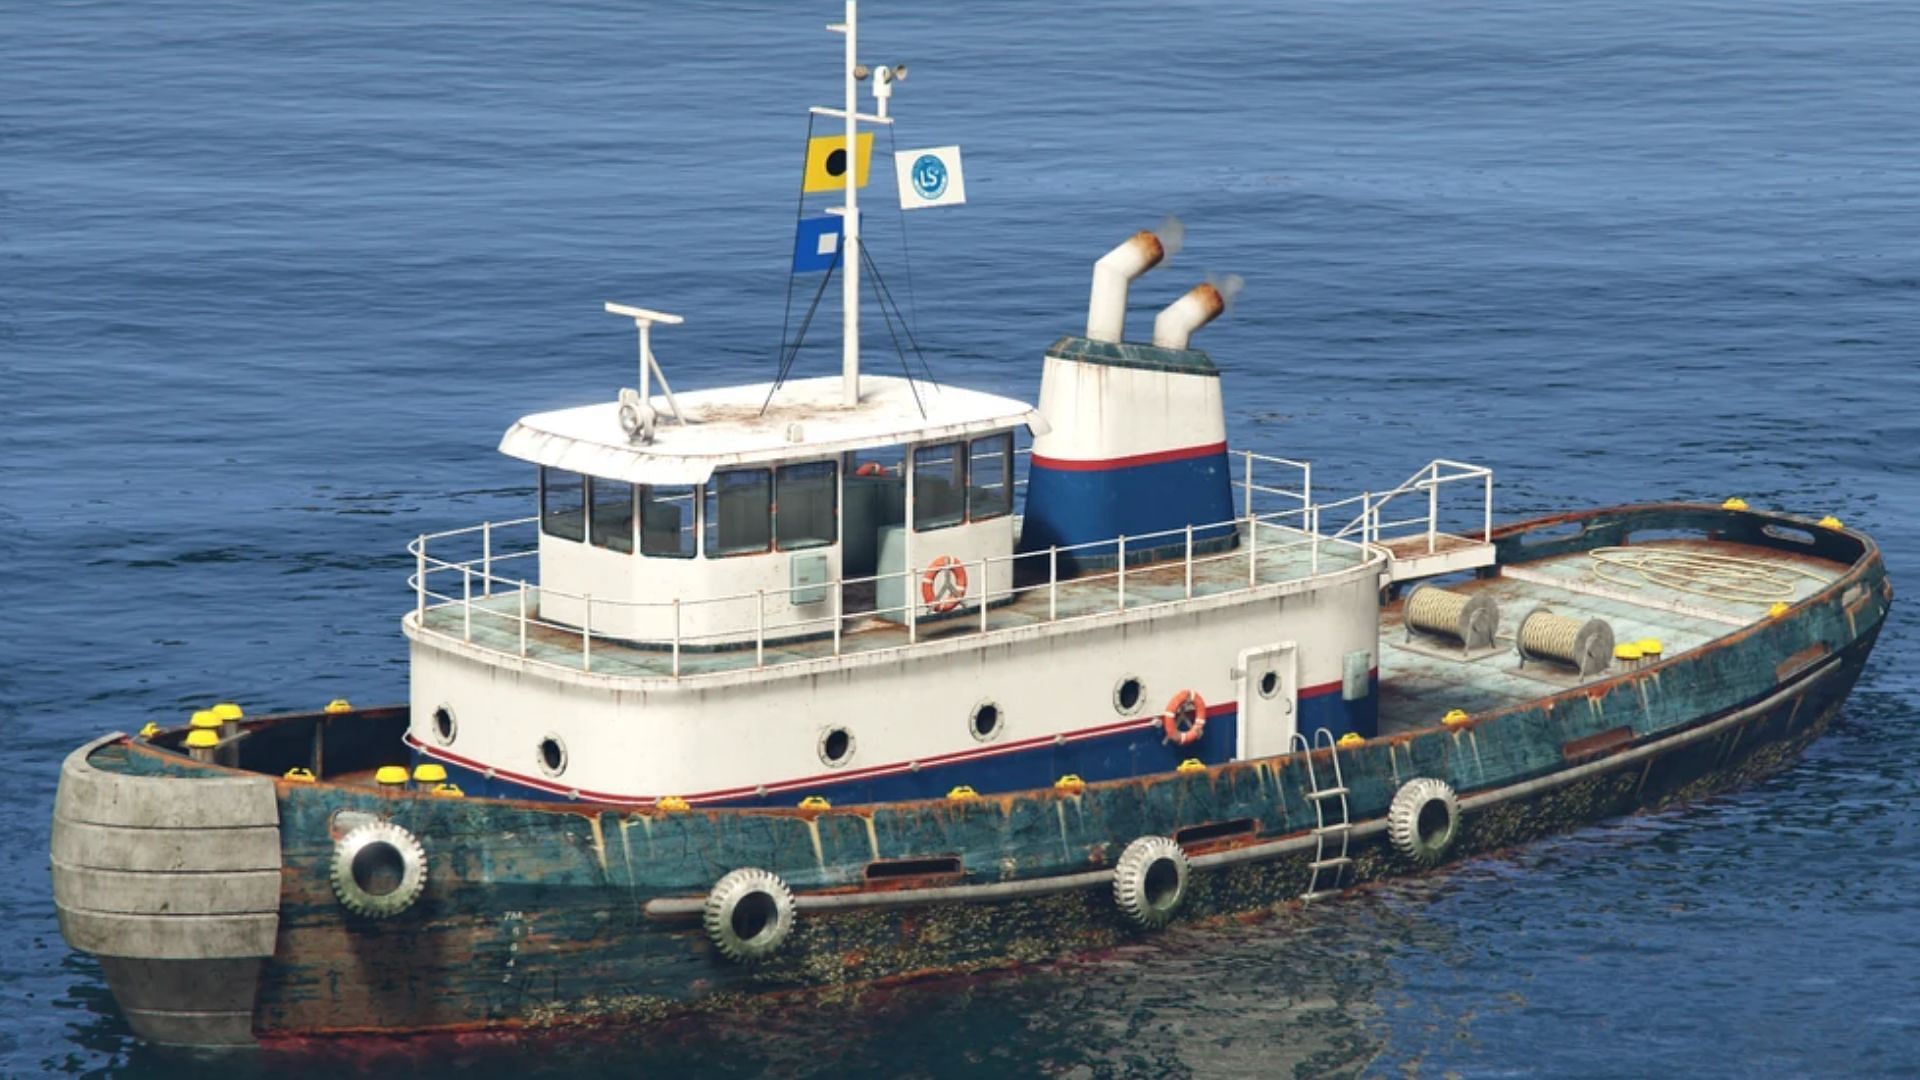 The Tug boat in Grand Theft Auto Online. (Image via GTA Wiki)